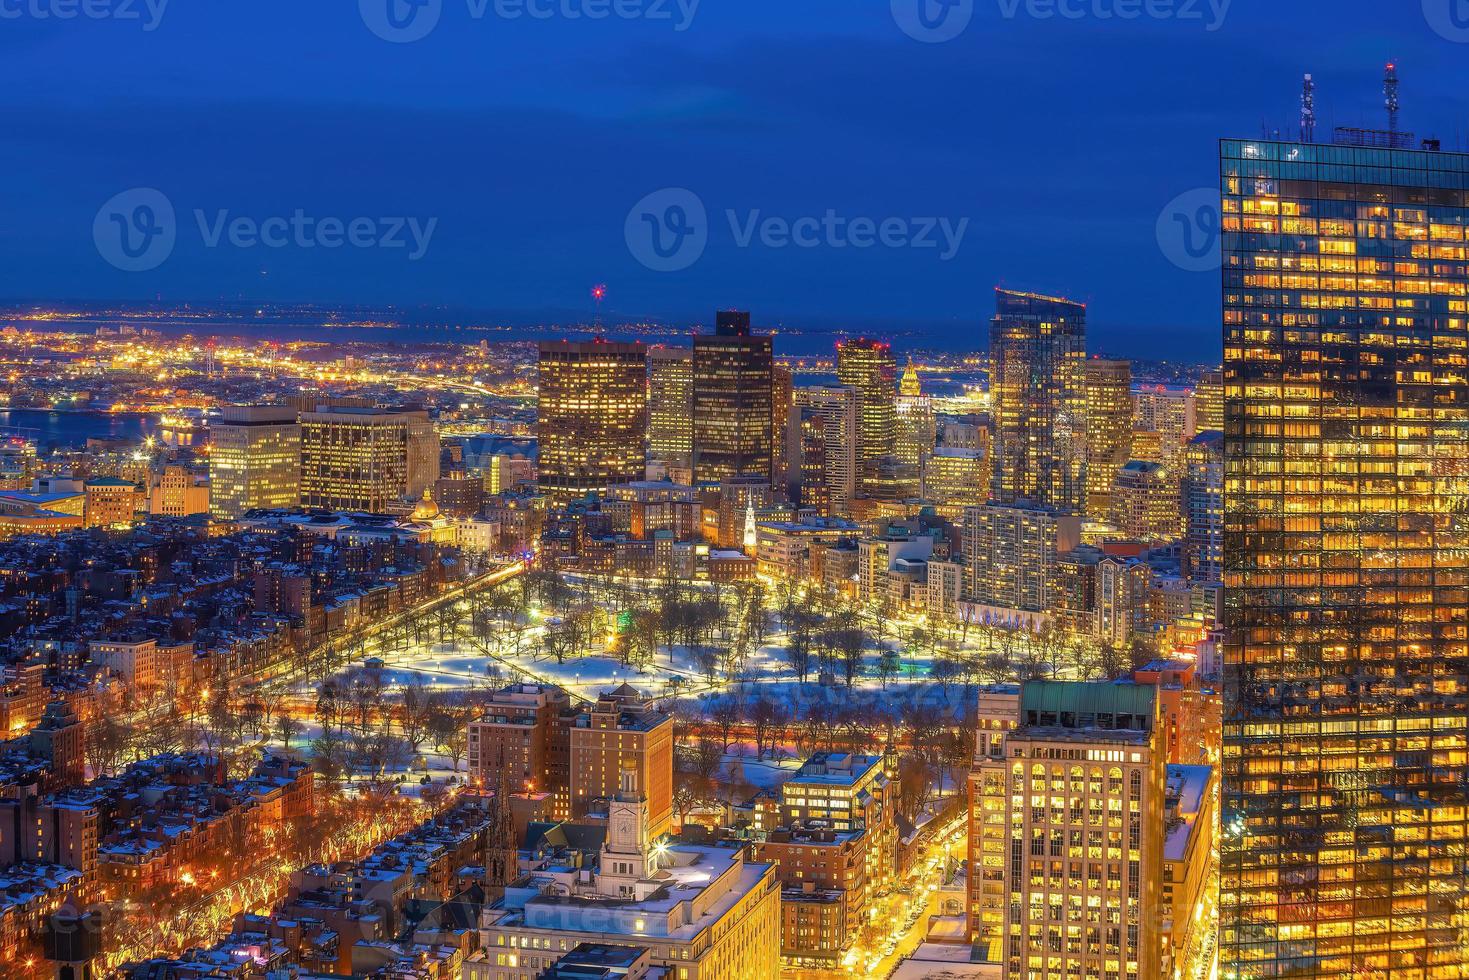 downtown Boston stad horizon stadsgezicht van Massachusetts in Verenigde staten foto